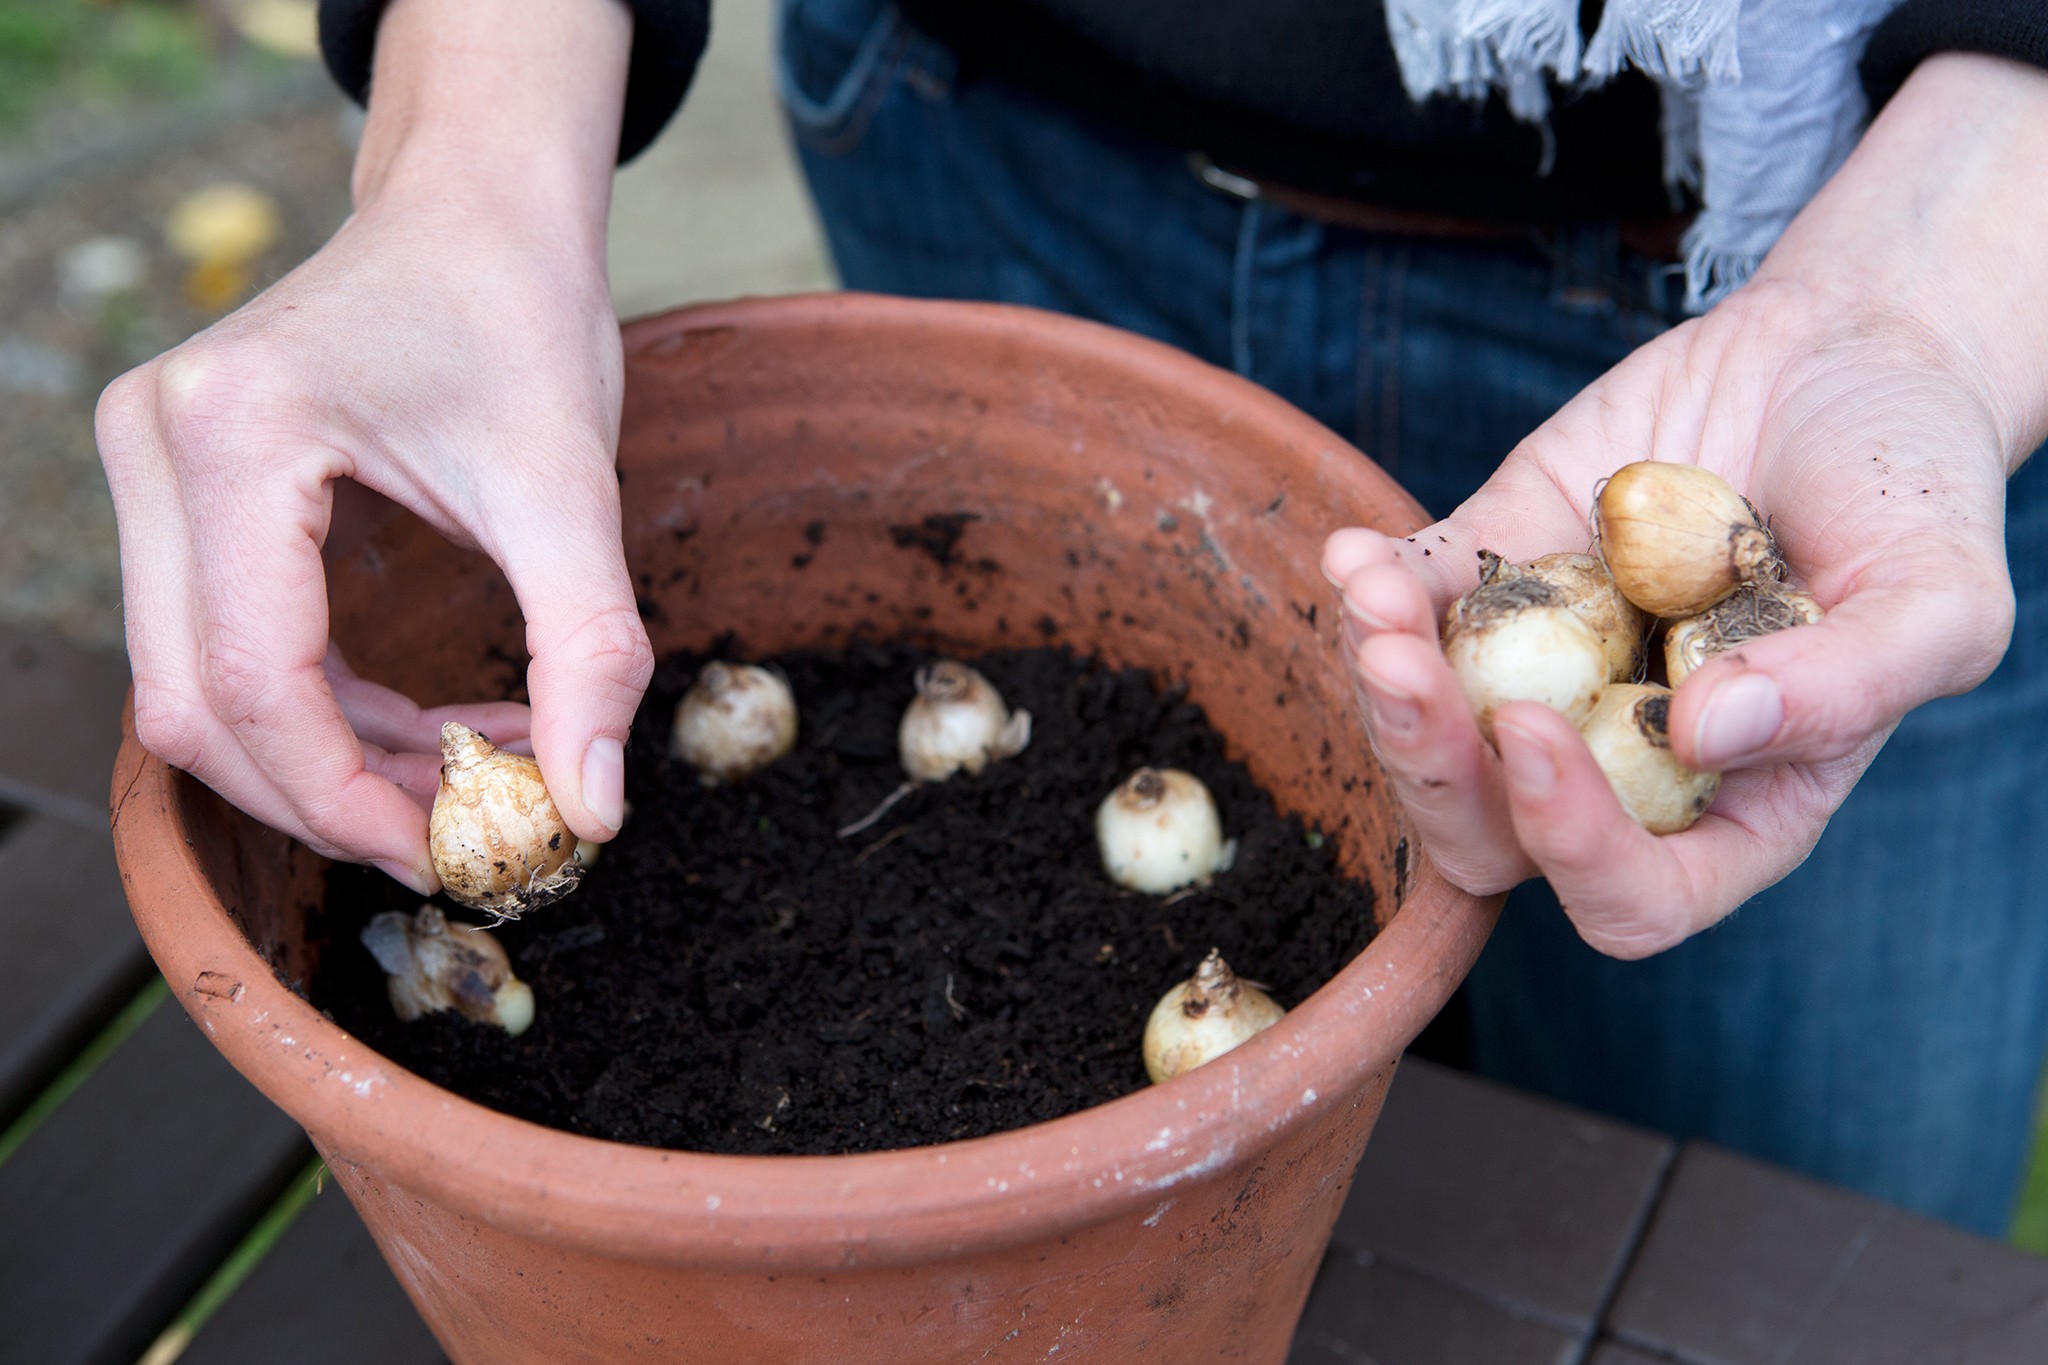 How to grow muscari - planting muscari bulbs